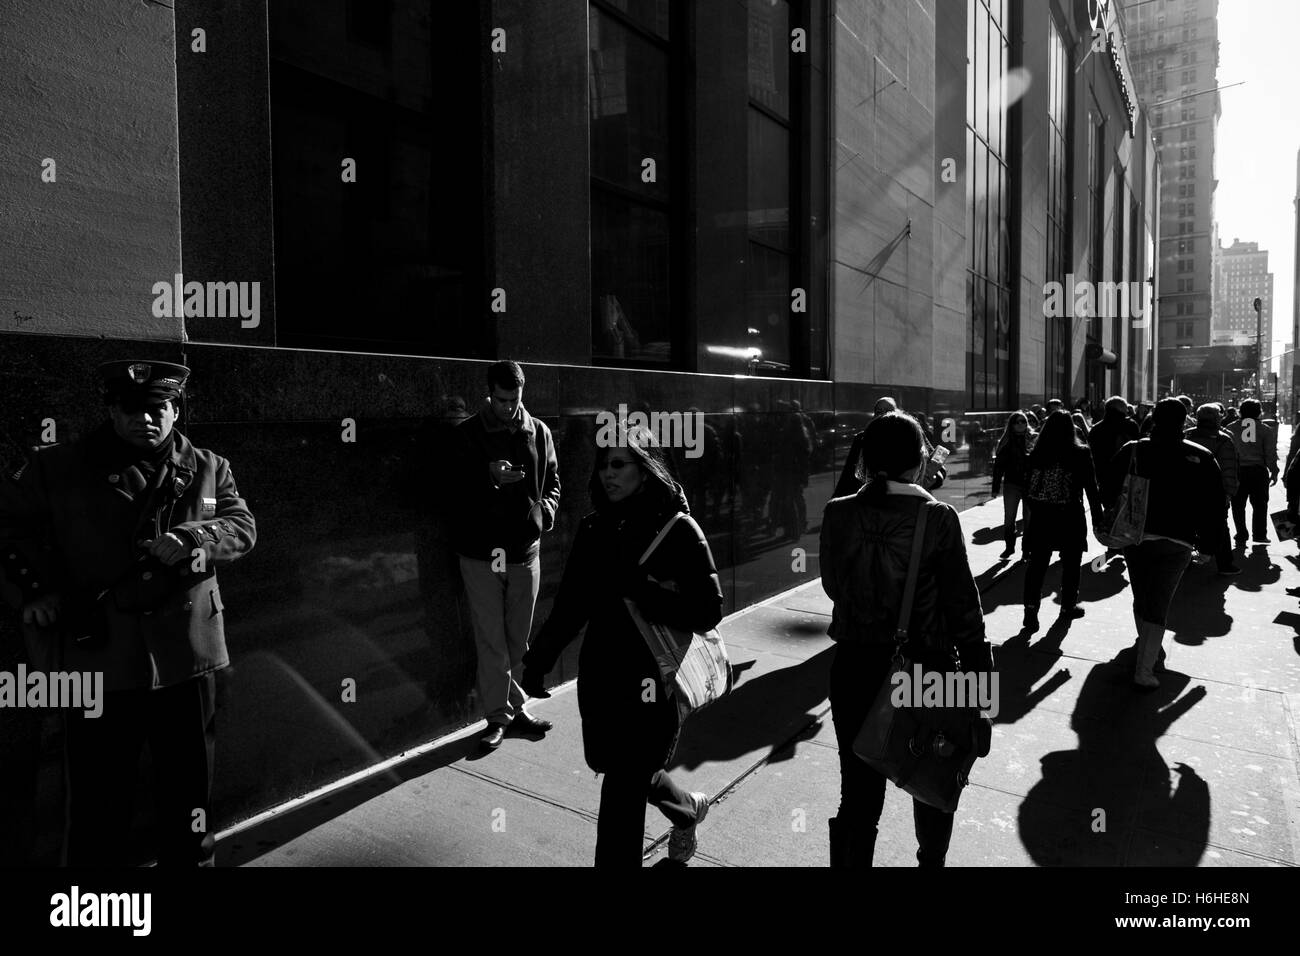 NEW-YORK - NOV 9: Pedestrians walking on the pavement in New-York, USA on November 9, 2012. Stock Photo